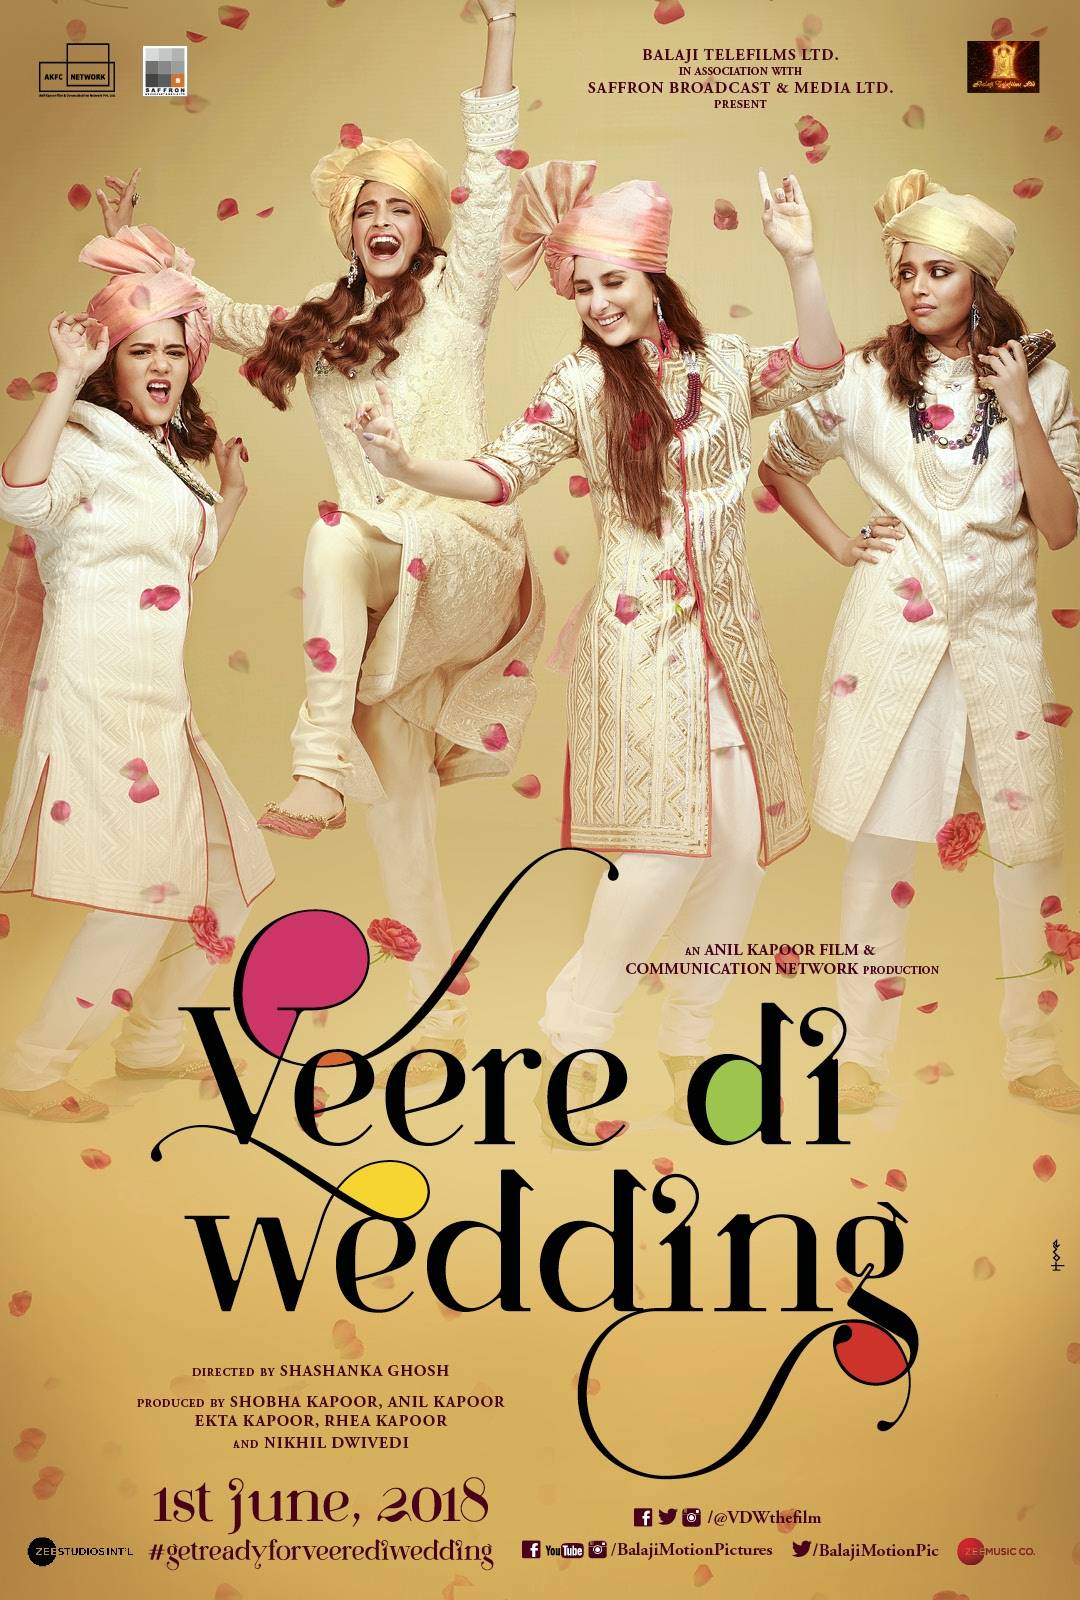 Filmklub: Veere di wedding (2018) / Film Club: Veere di wedding (2018)